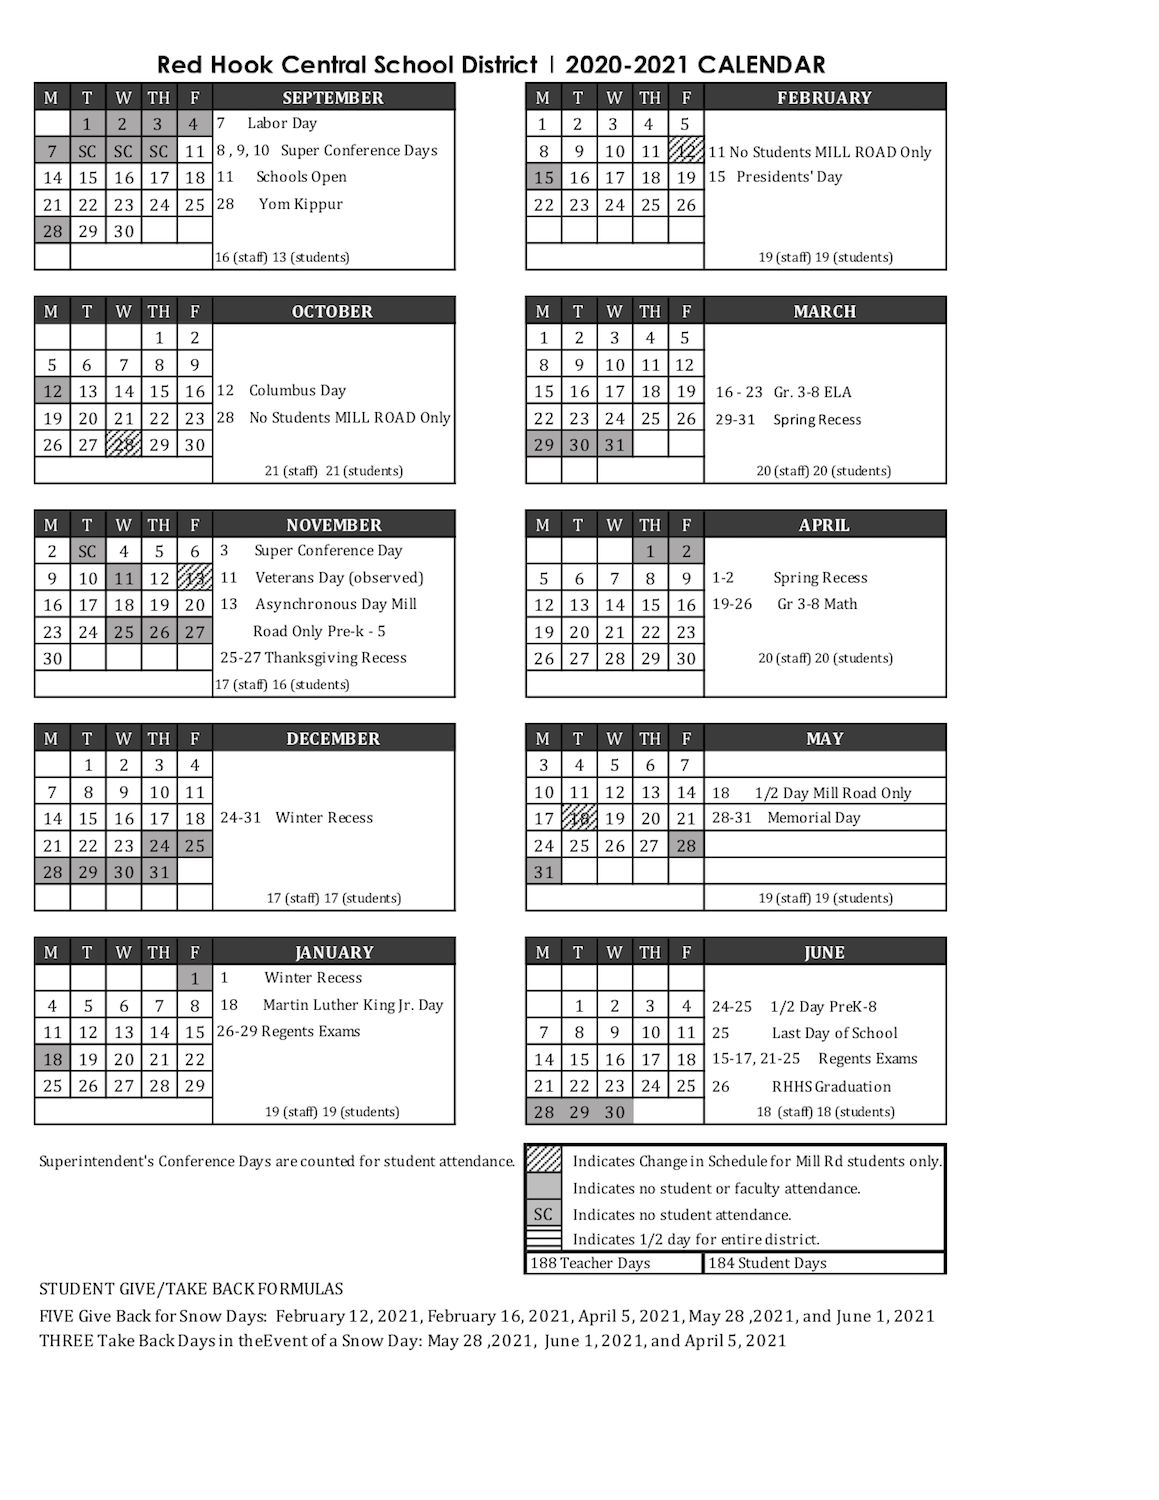 Calendar_2020_21_updated_April_2021.png